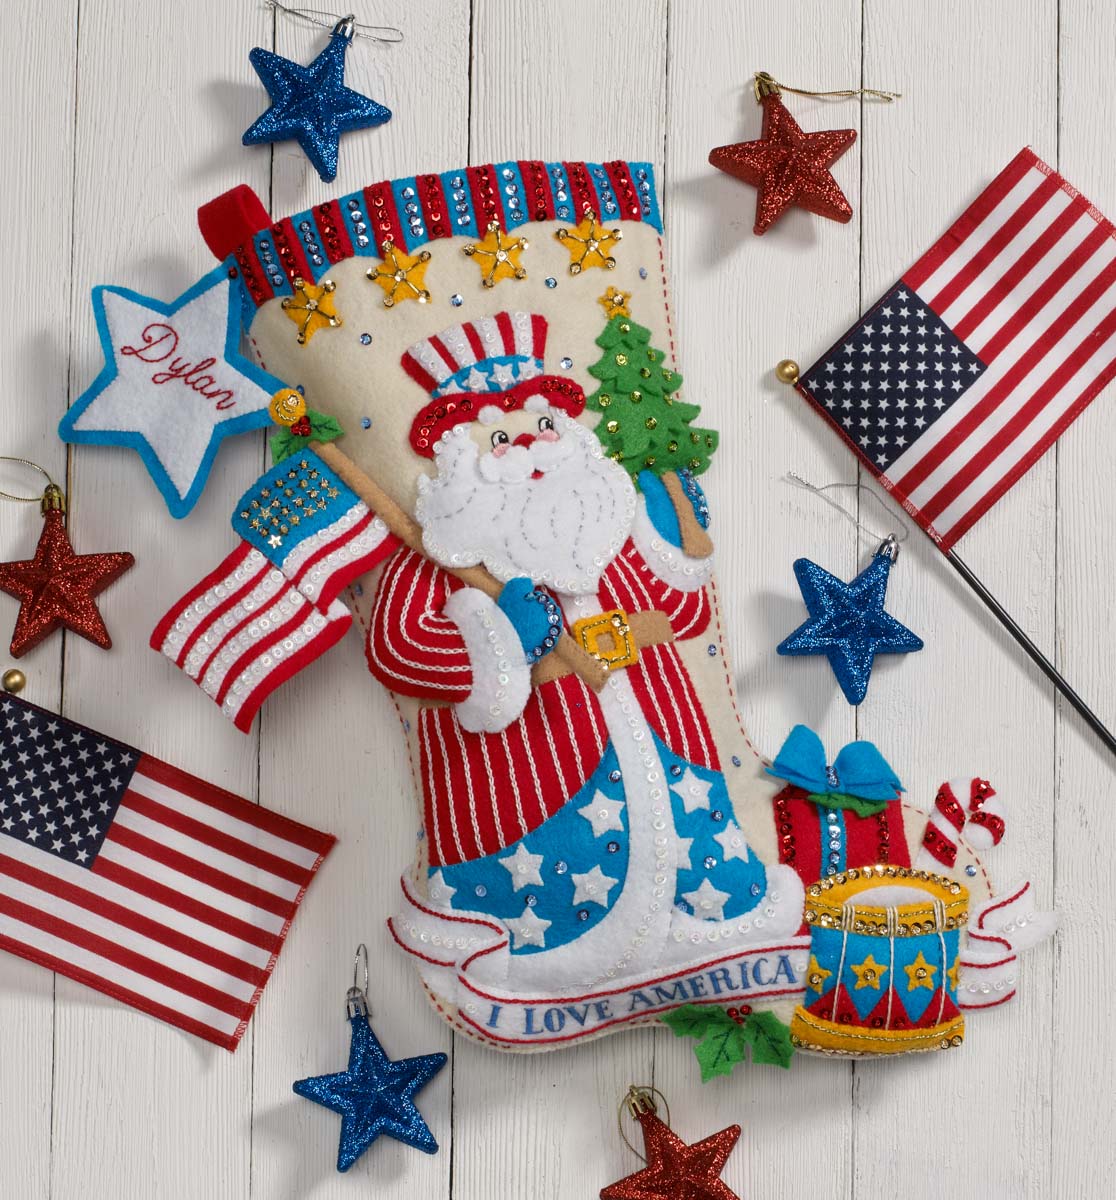 Bucilla ® Seasonal - Felt - Stocking Kits - Stars & Stripes Santa - 89472E